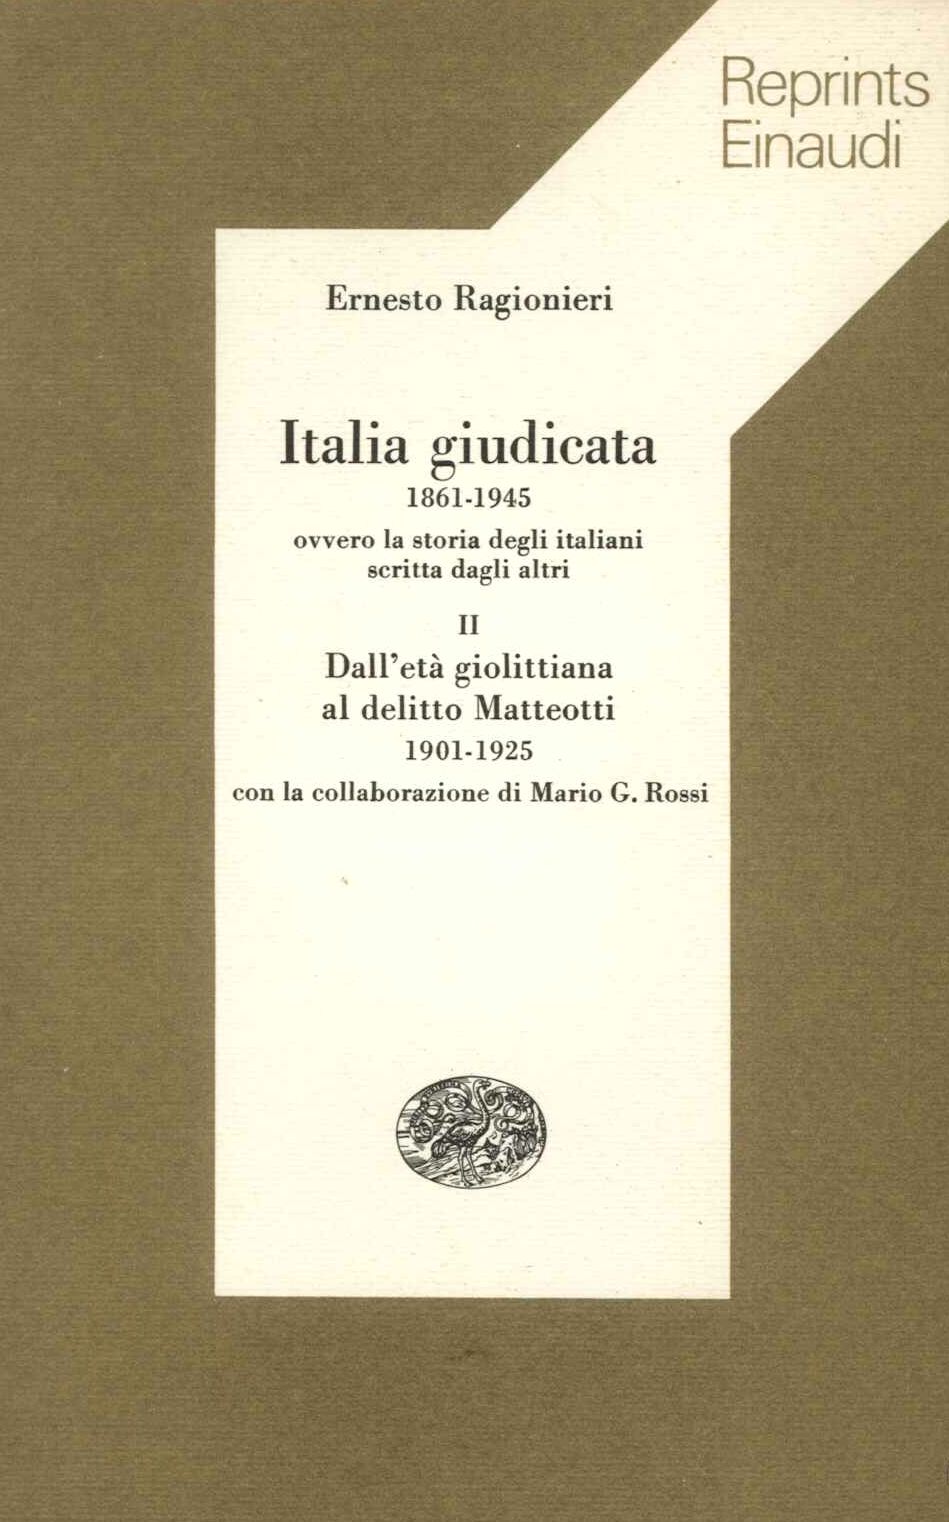 ITALIA GIUDICATA 1861-1945. VOL II" "TORINO" 1976 "EINAUDI